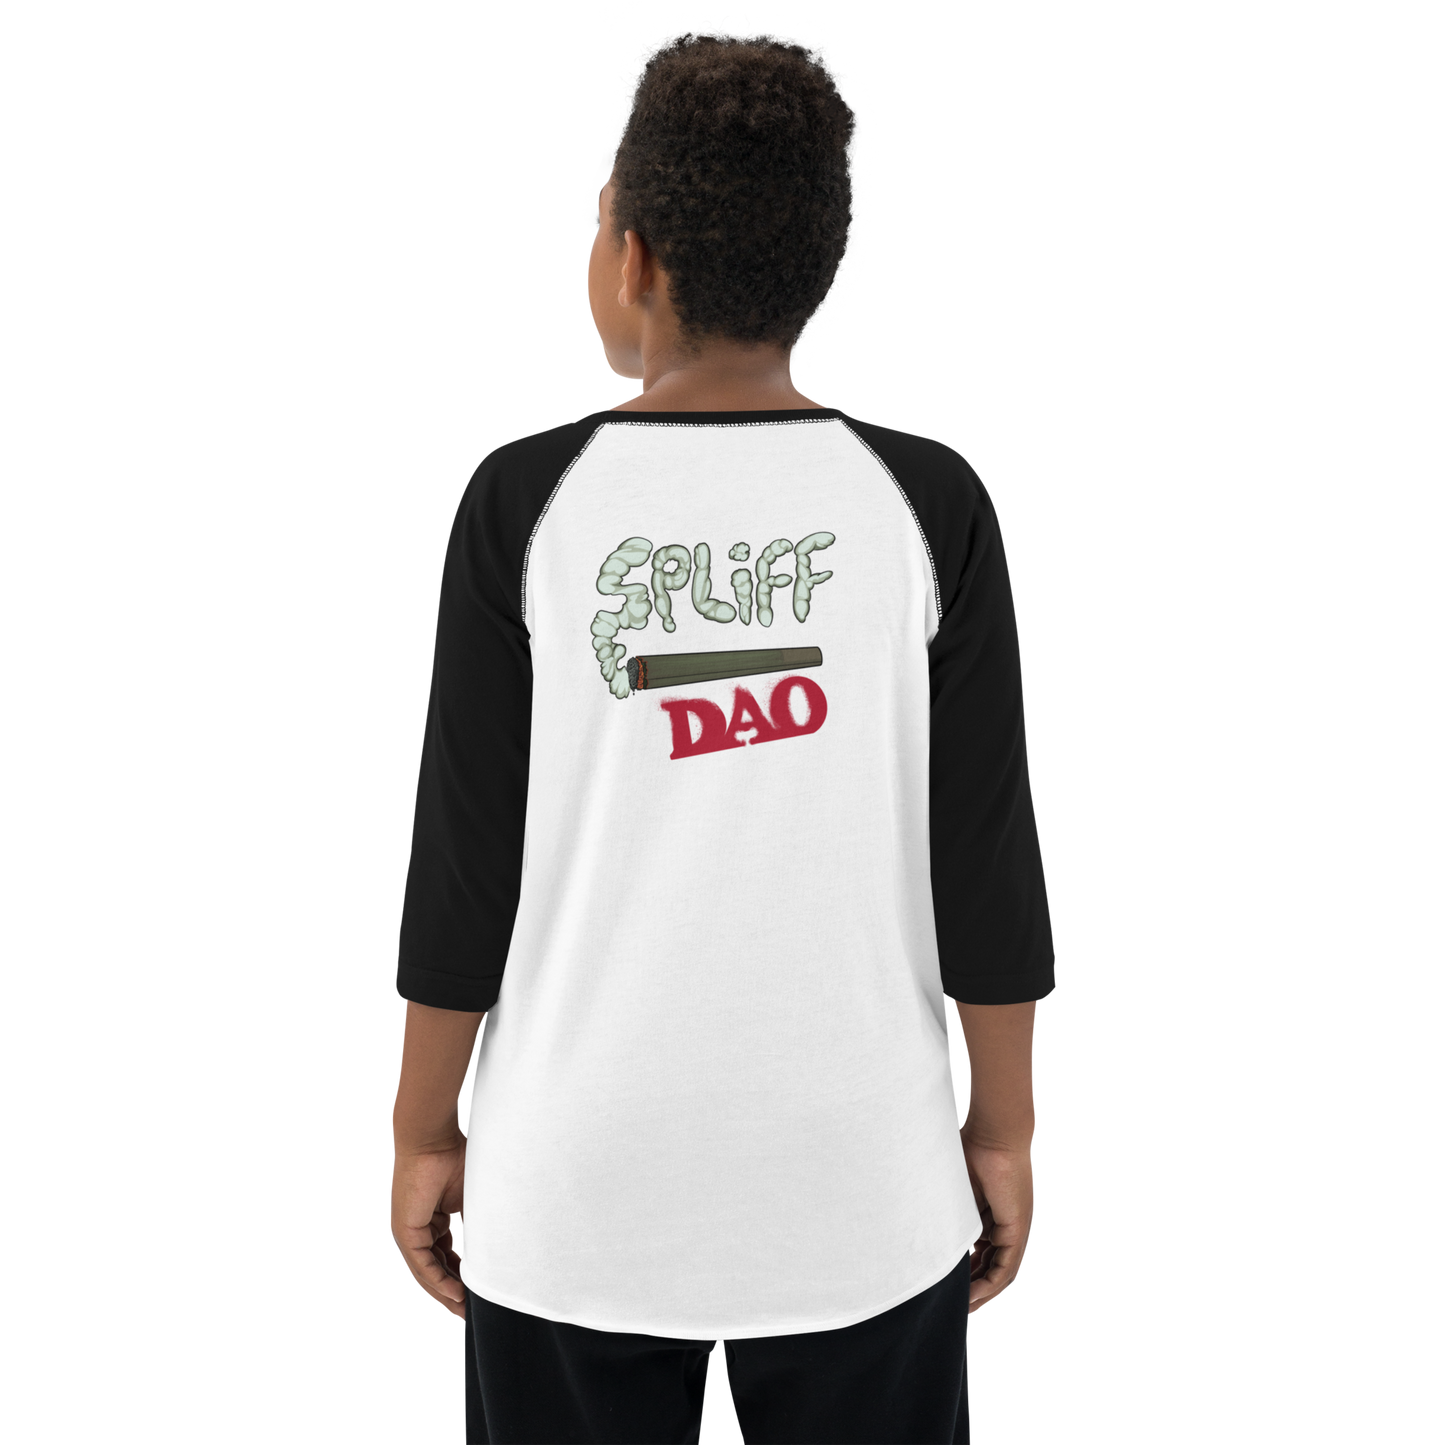 SpliffDAO Double-Sided Youth Baseball Shirt